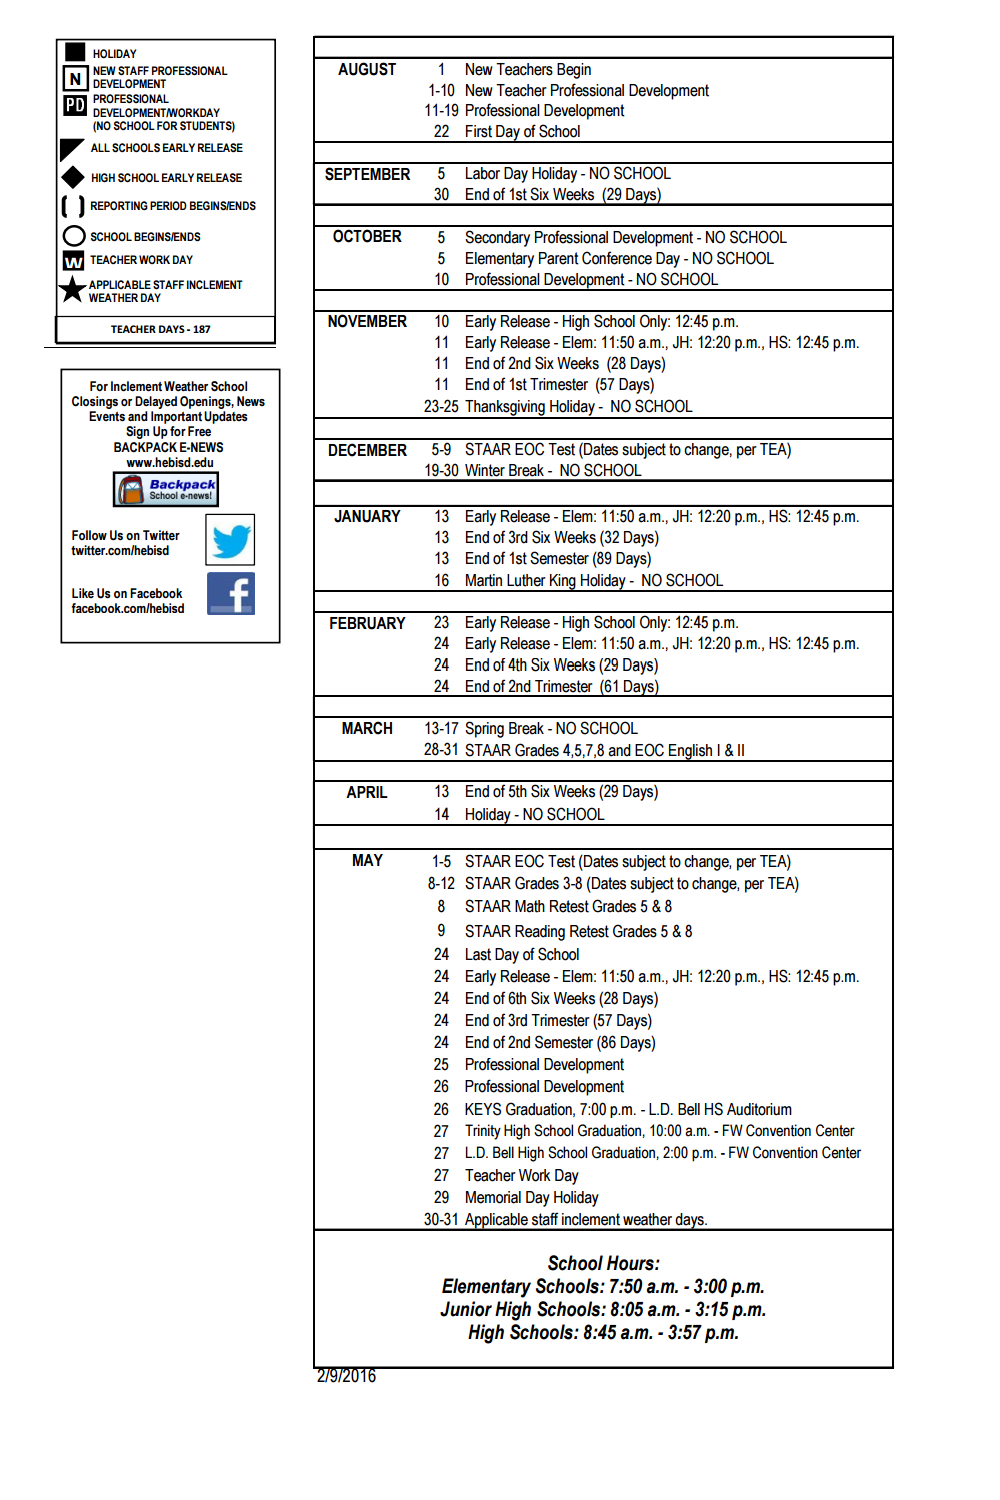 District School Academic Calendar Key for Technical Ed Ctr